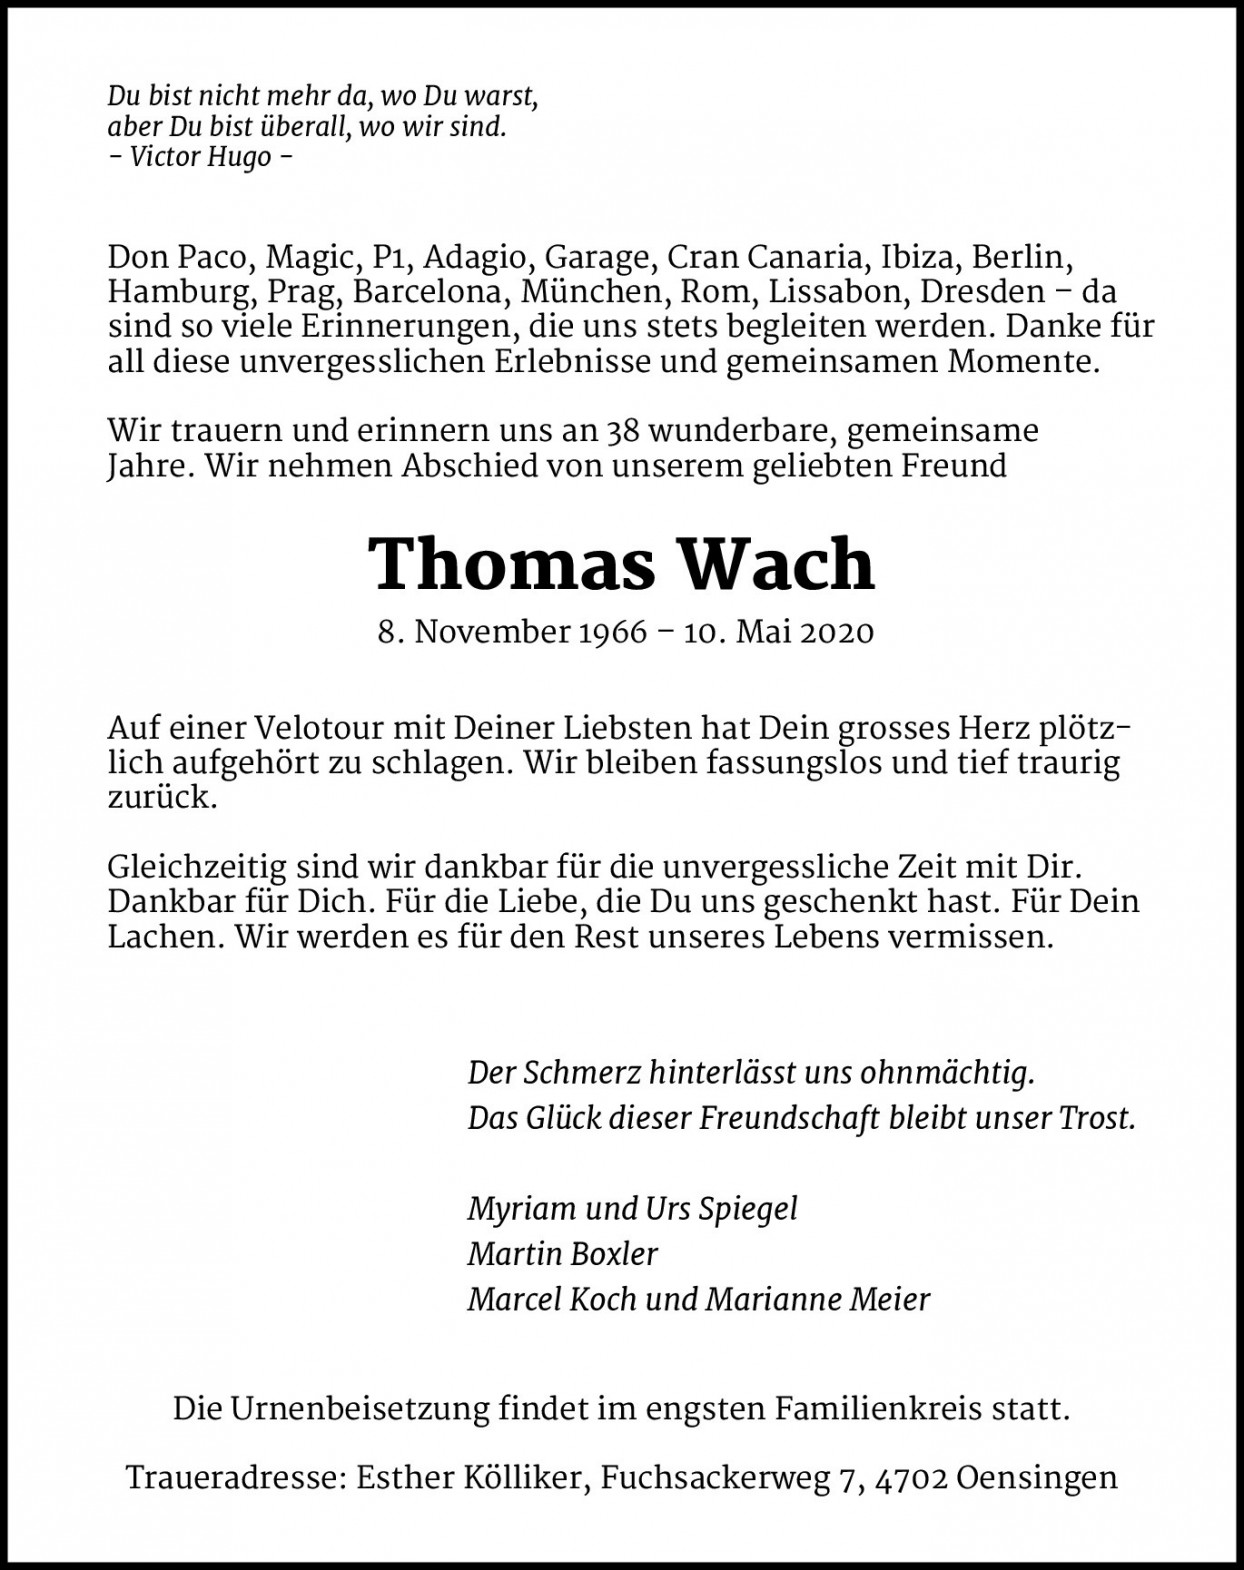 Thomas Wach